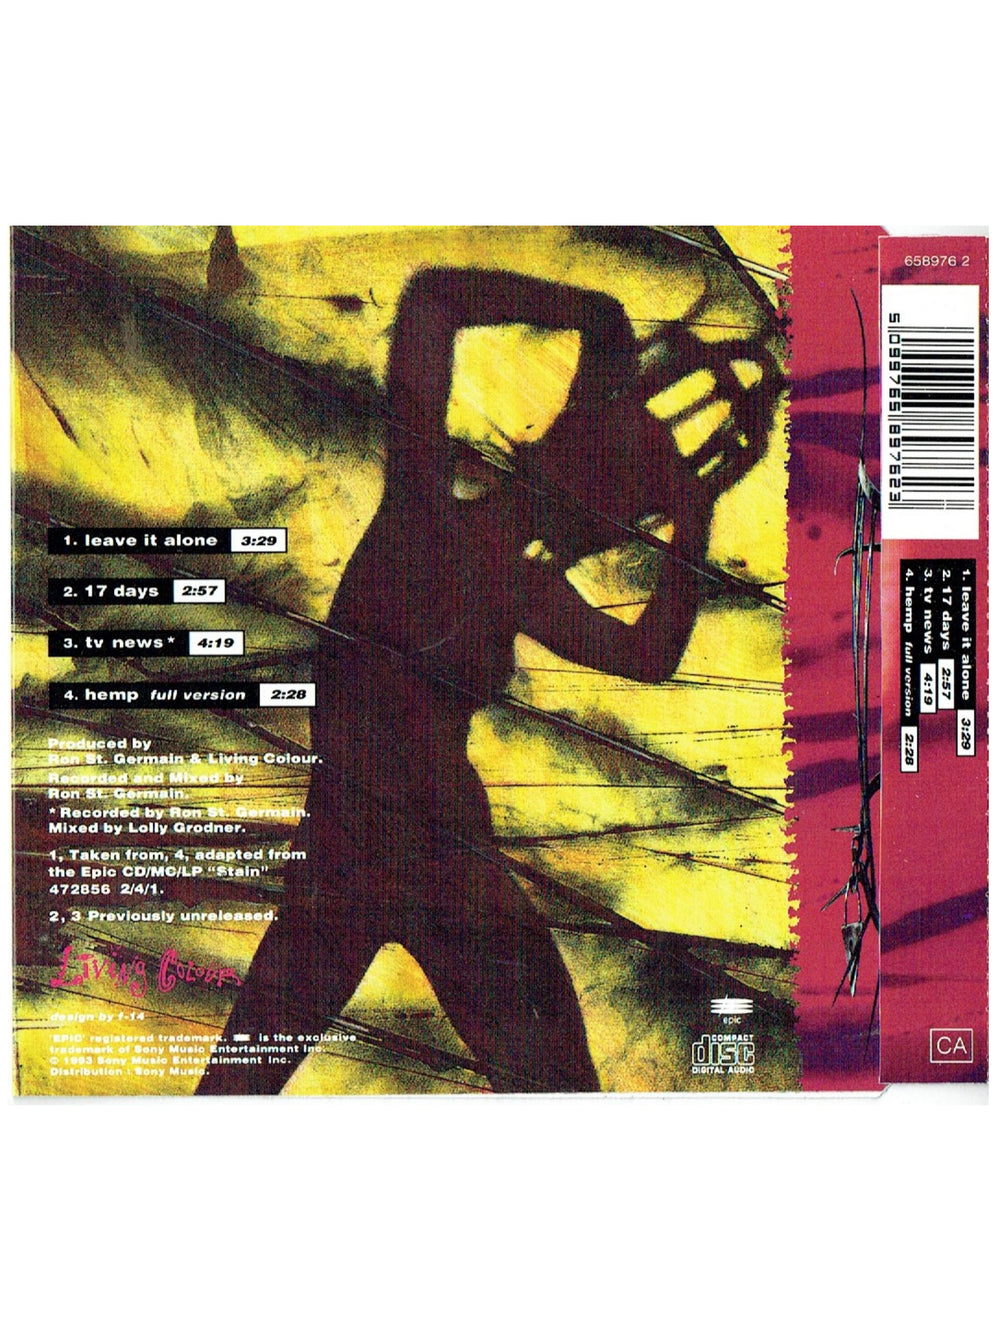 Prince – Living Colour Leave It Alone CD Single Original 1993 UK Release 17 Days Prince